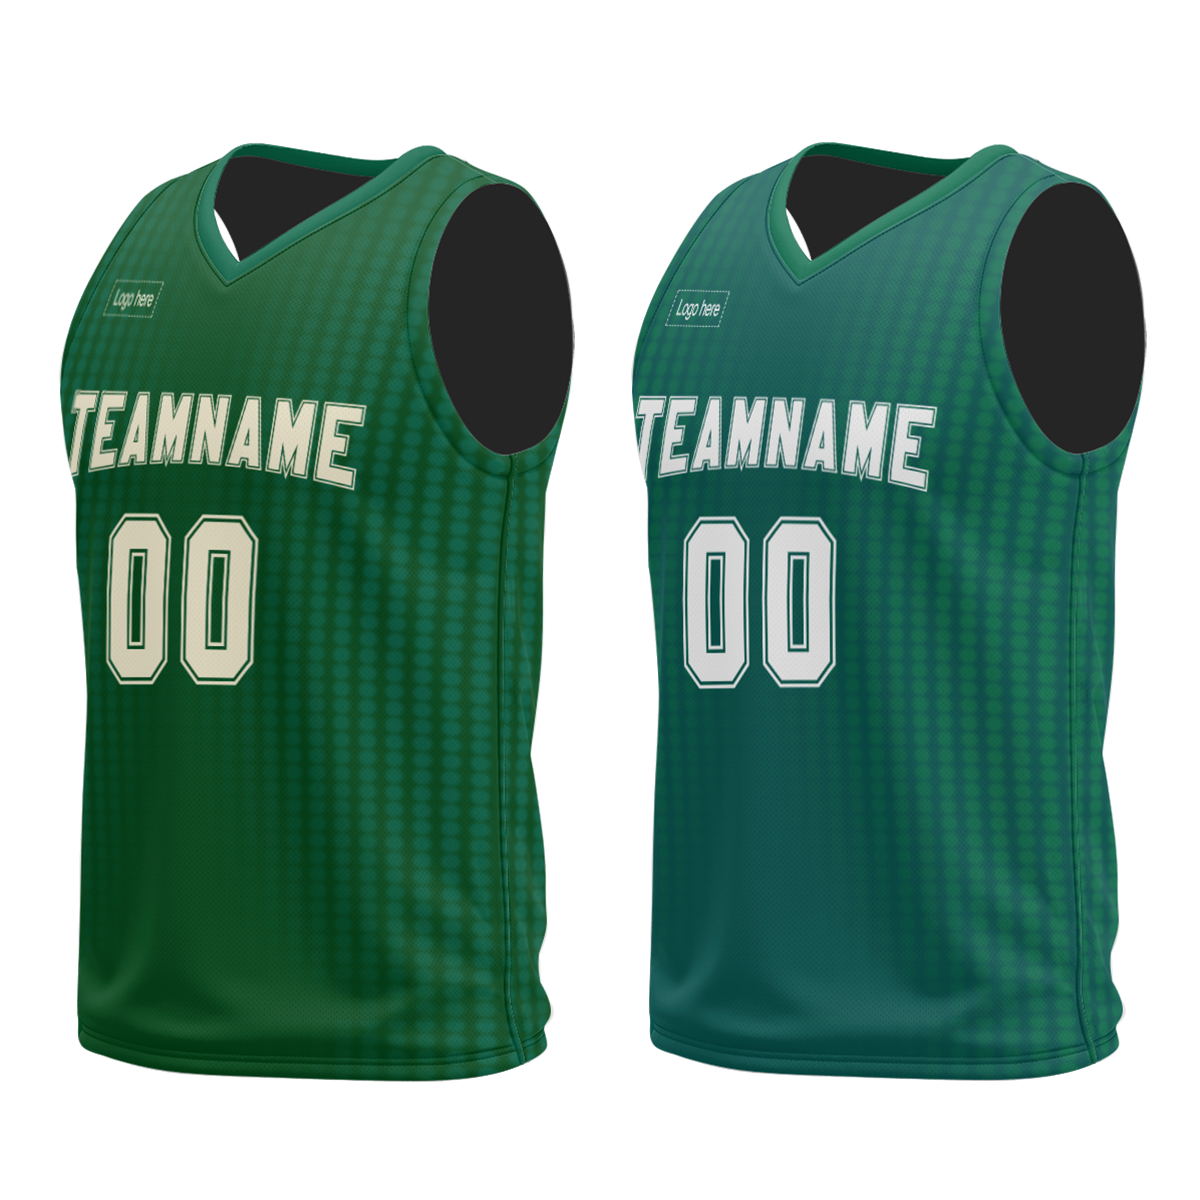 custom-sublimation-polyester-crewneck-quick-dry-club-basketball-jersey-blank-basketball-uniforms-sets-at-cj-pod-5